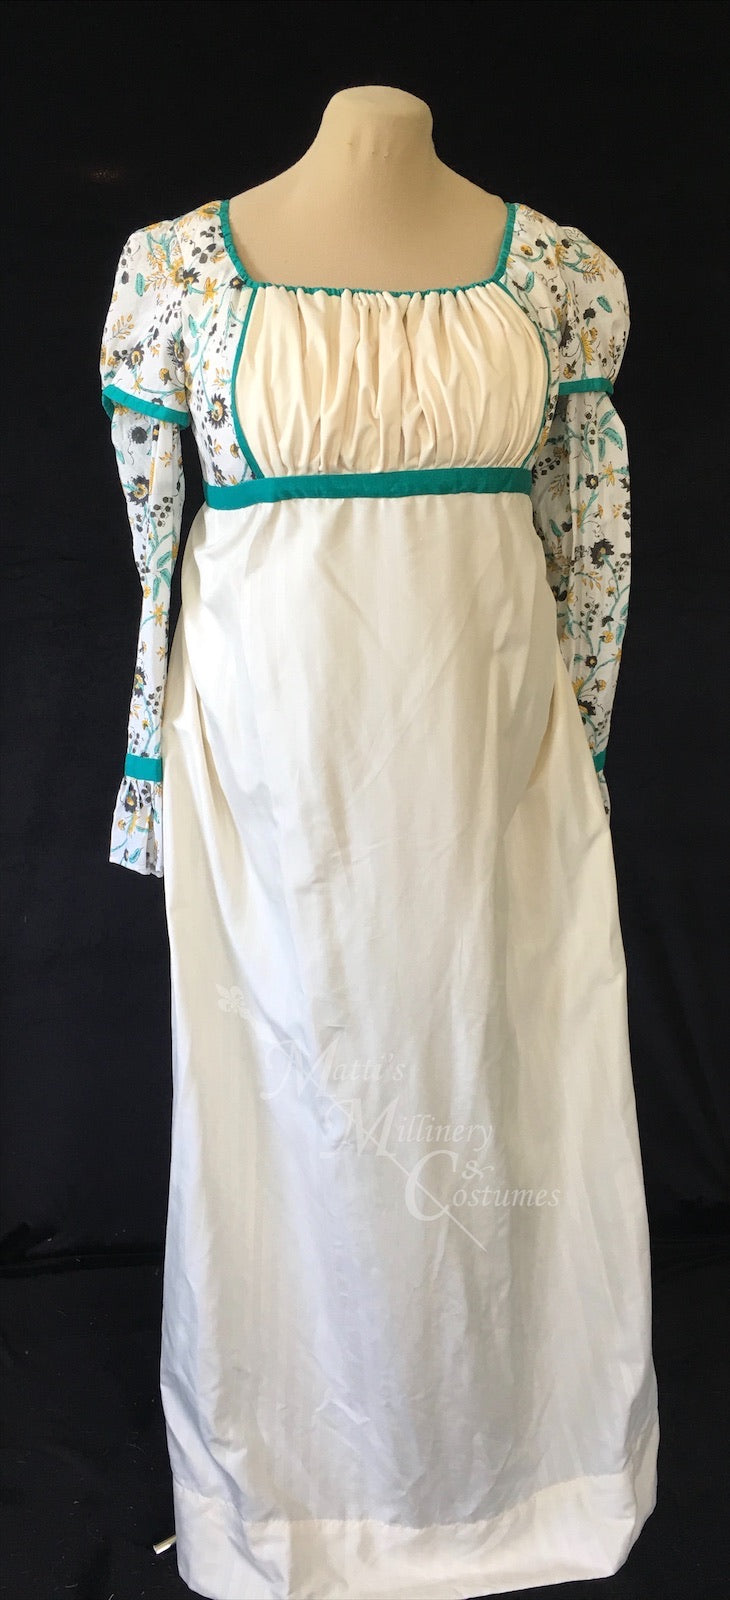 Teal Madeline Block Print Cotton Jane Austen Regency Day Dress Gown